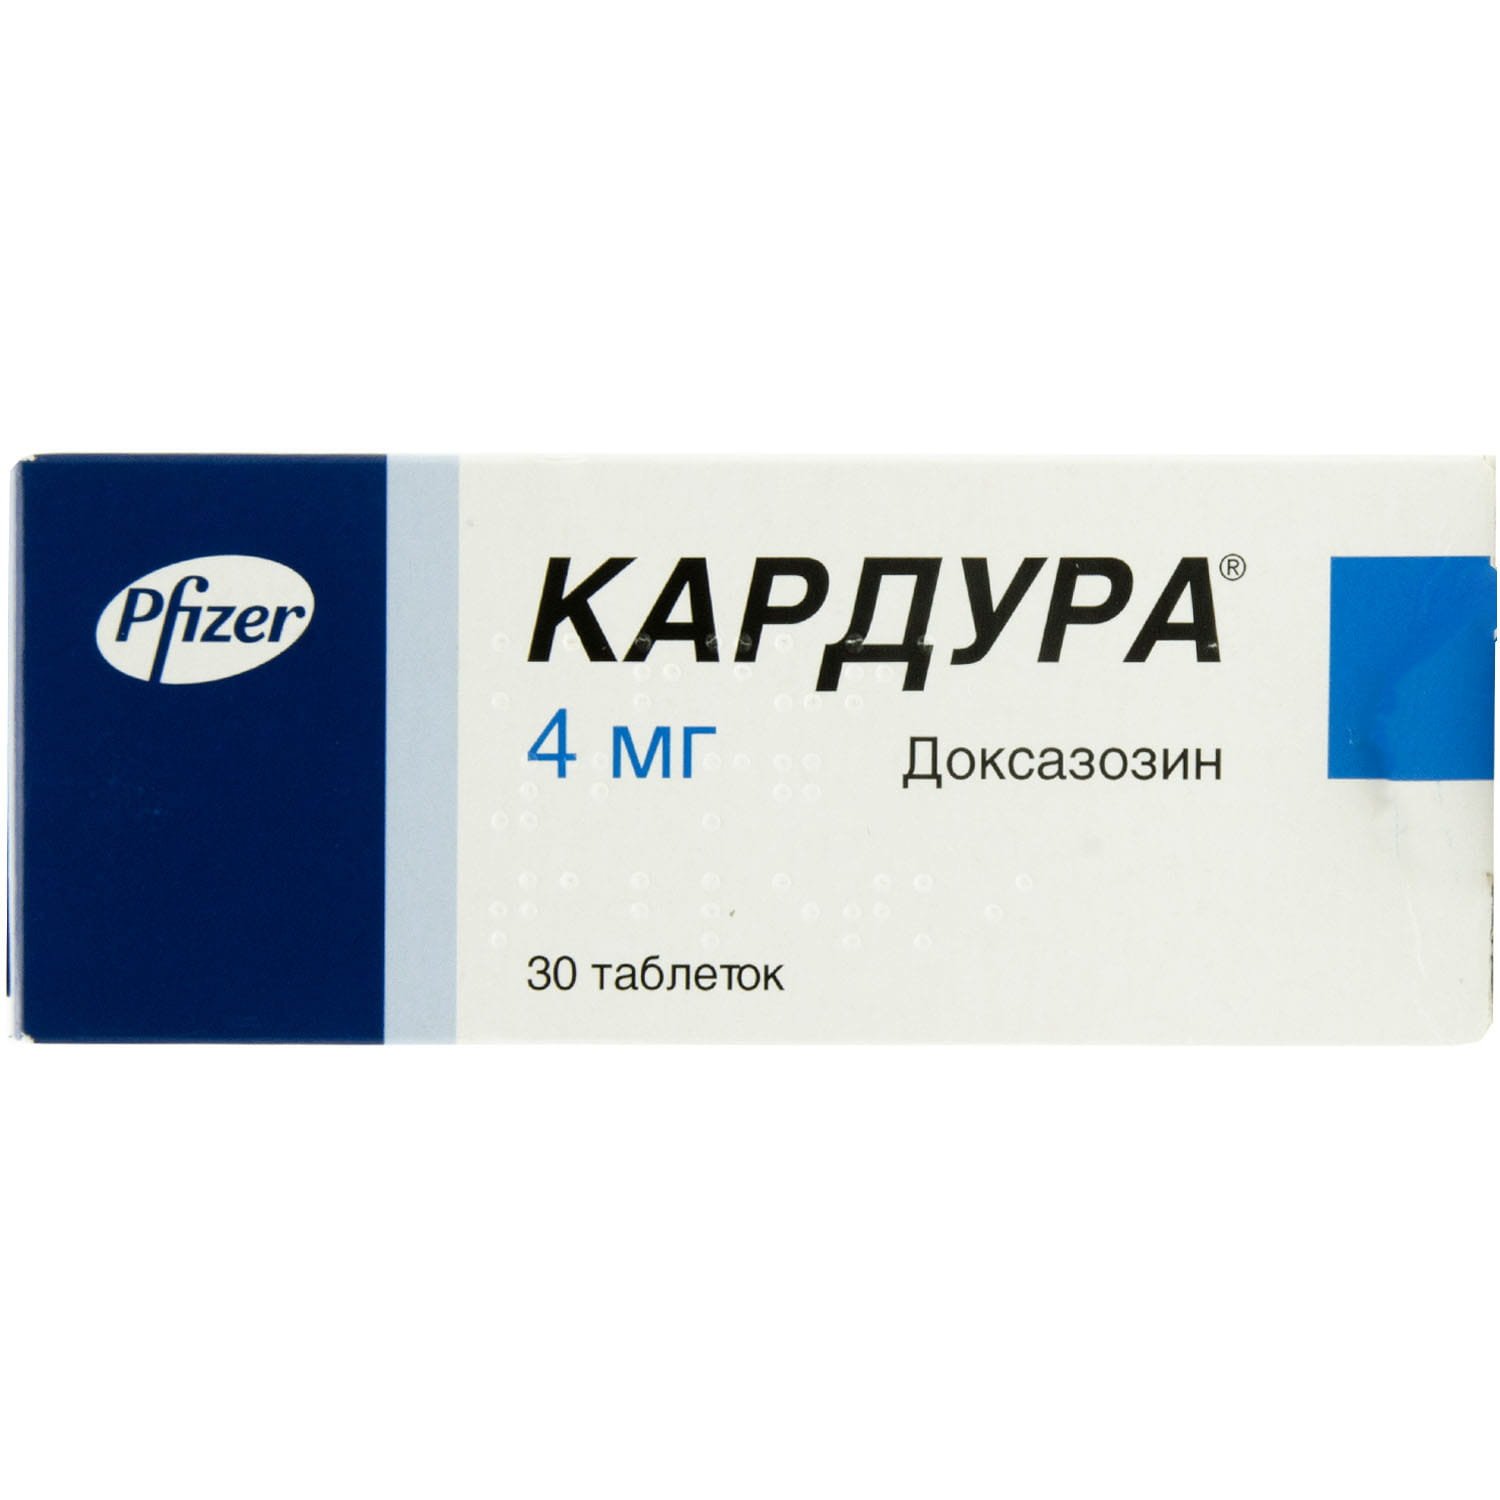 Кардура таблетки по 4 мг, 30 шт.: инструкция, цена, отзывы, аналоги .